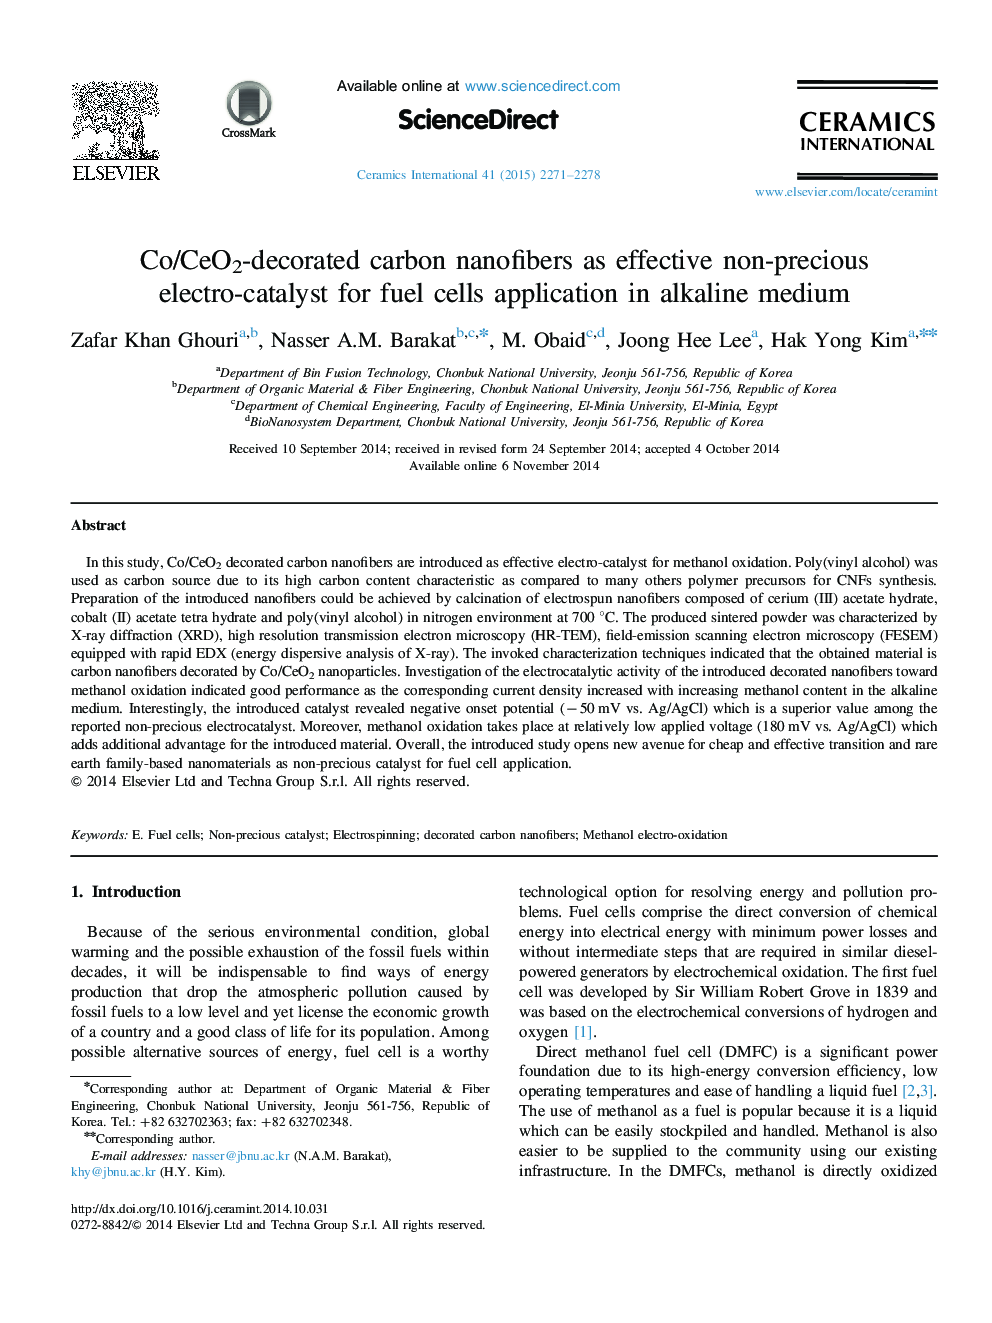 Co/CeO2-decorated carbon nanofibers as effective non-precious electro-catalyst for fuel cells application in alkaline medium